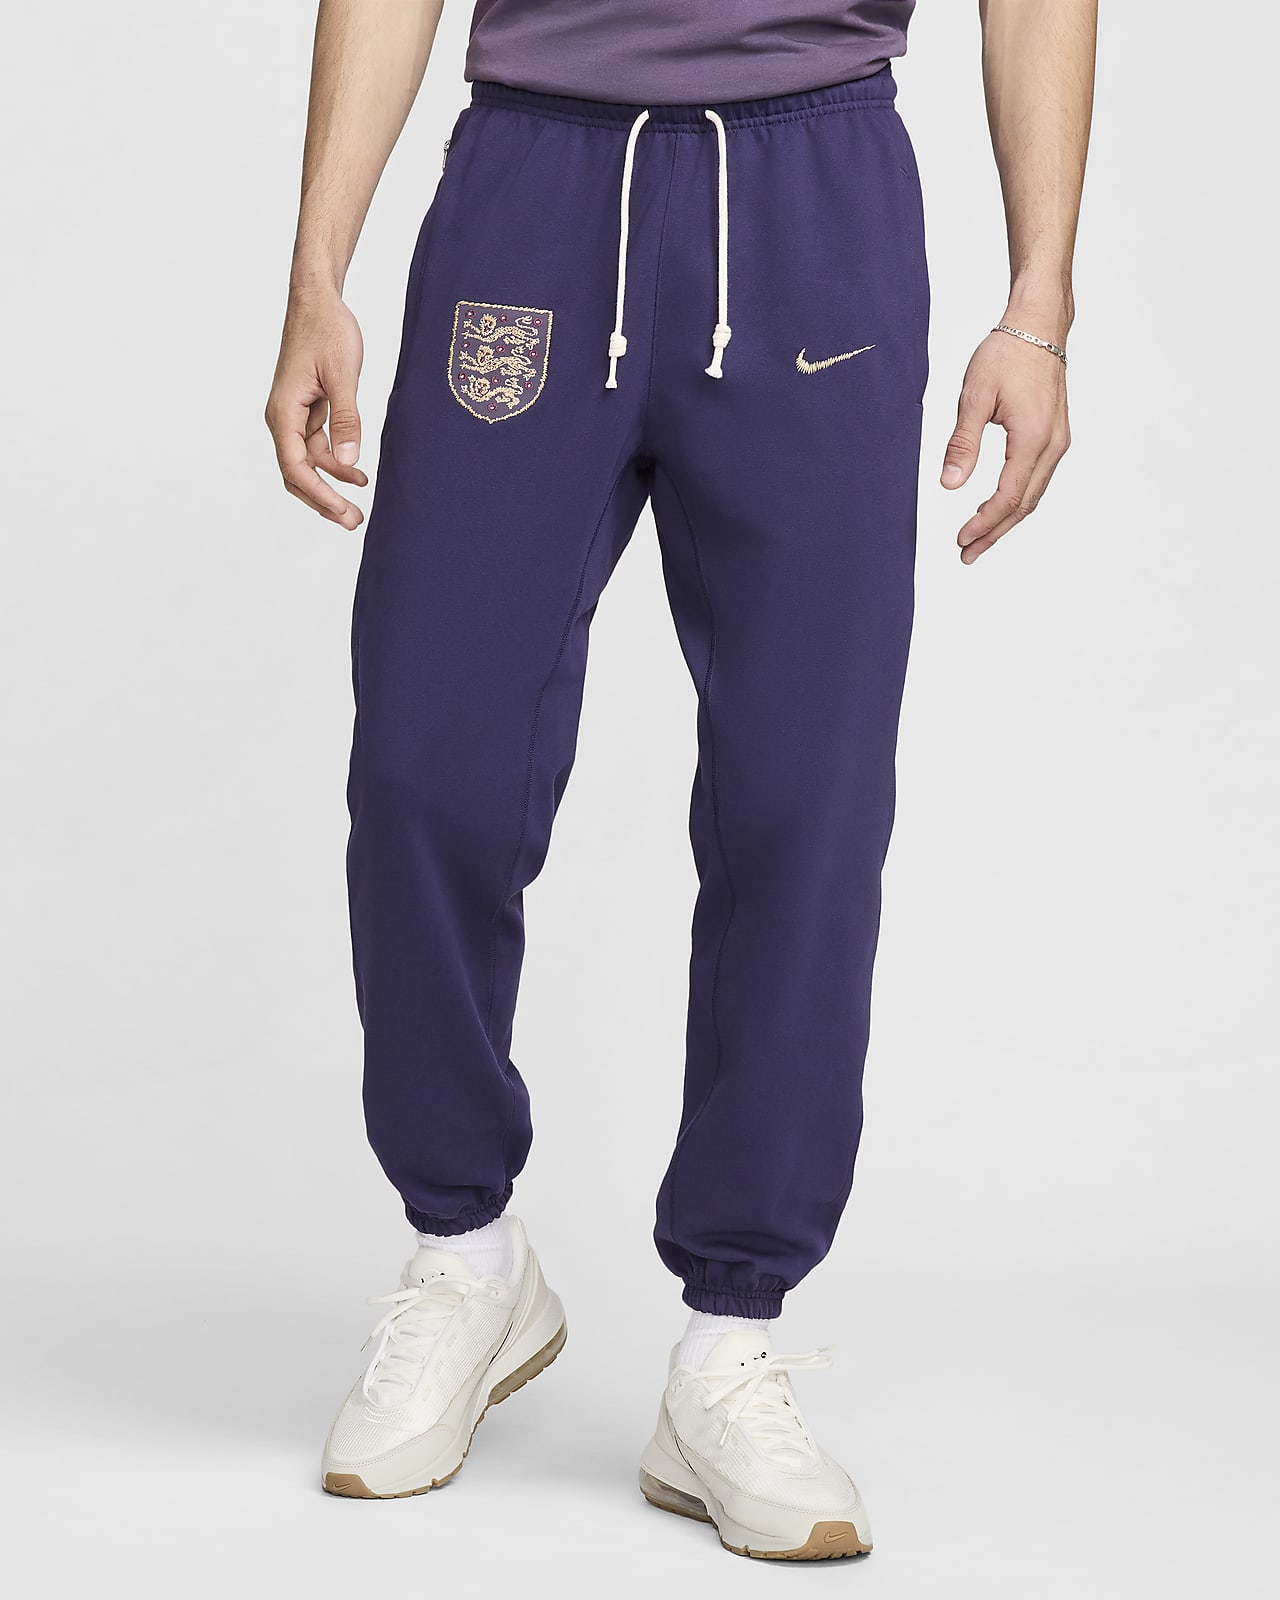 Pantaloni da calcio Nike Inghilterra Standard Issue – Uomo